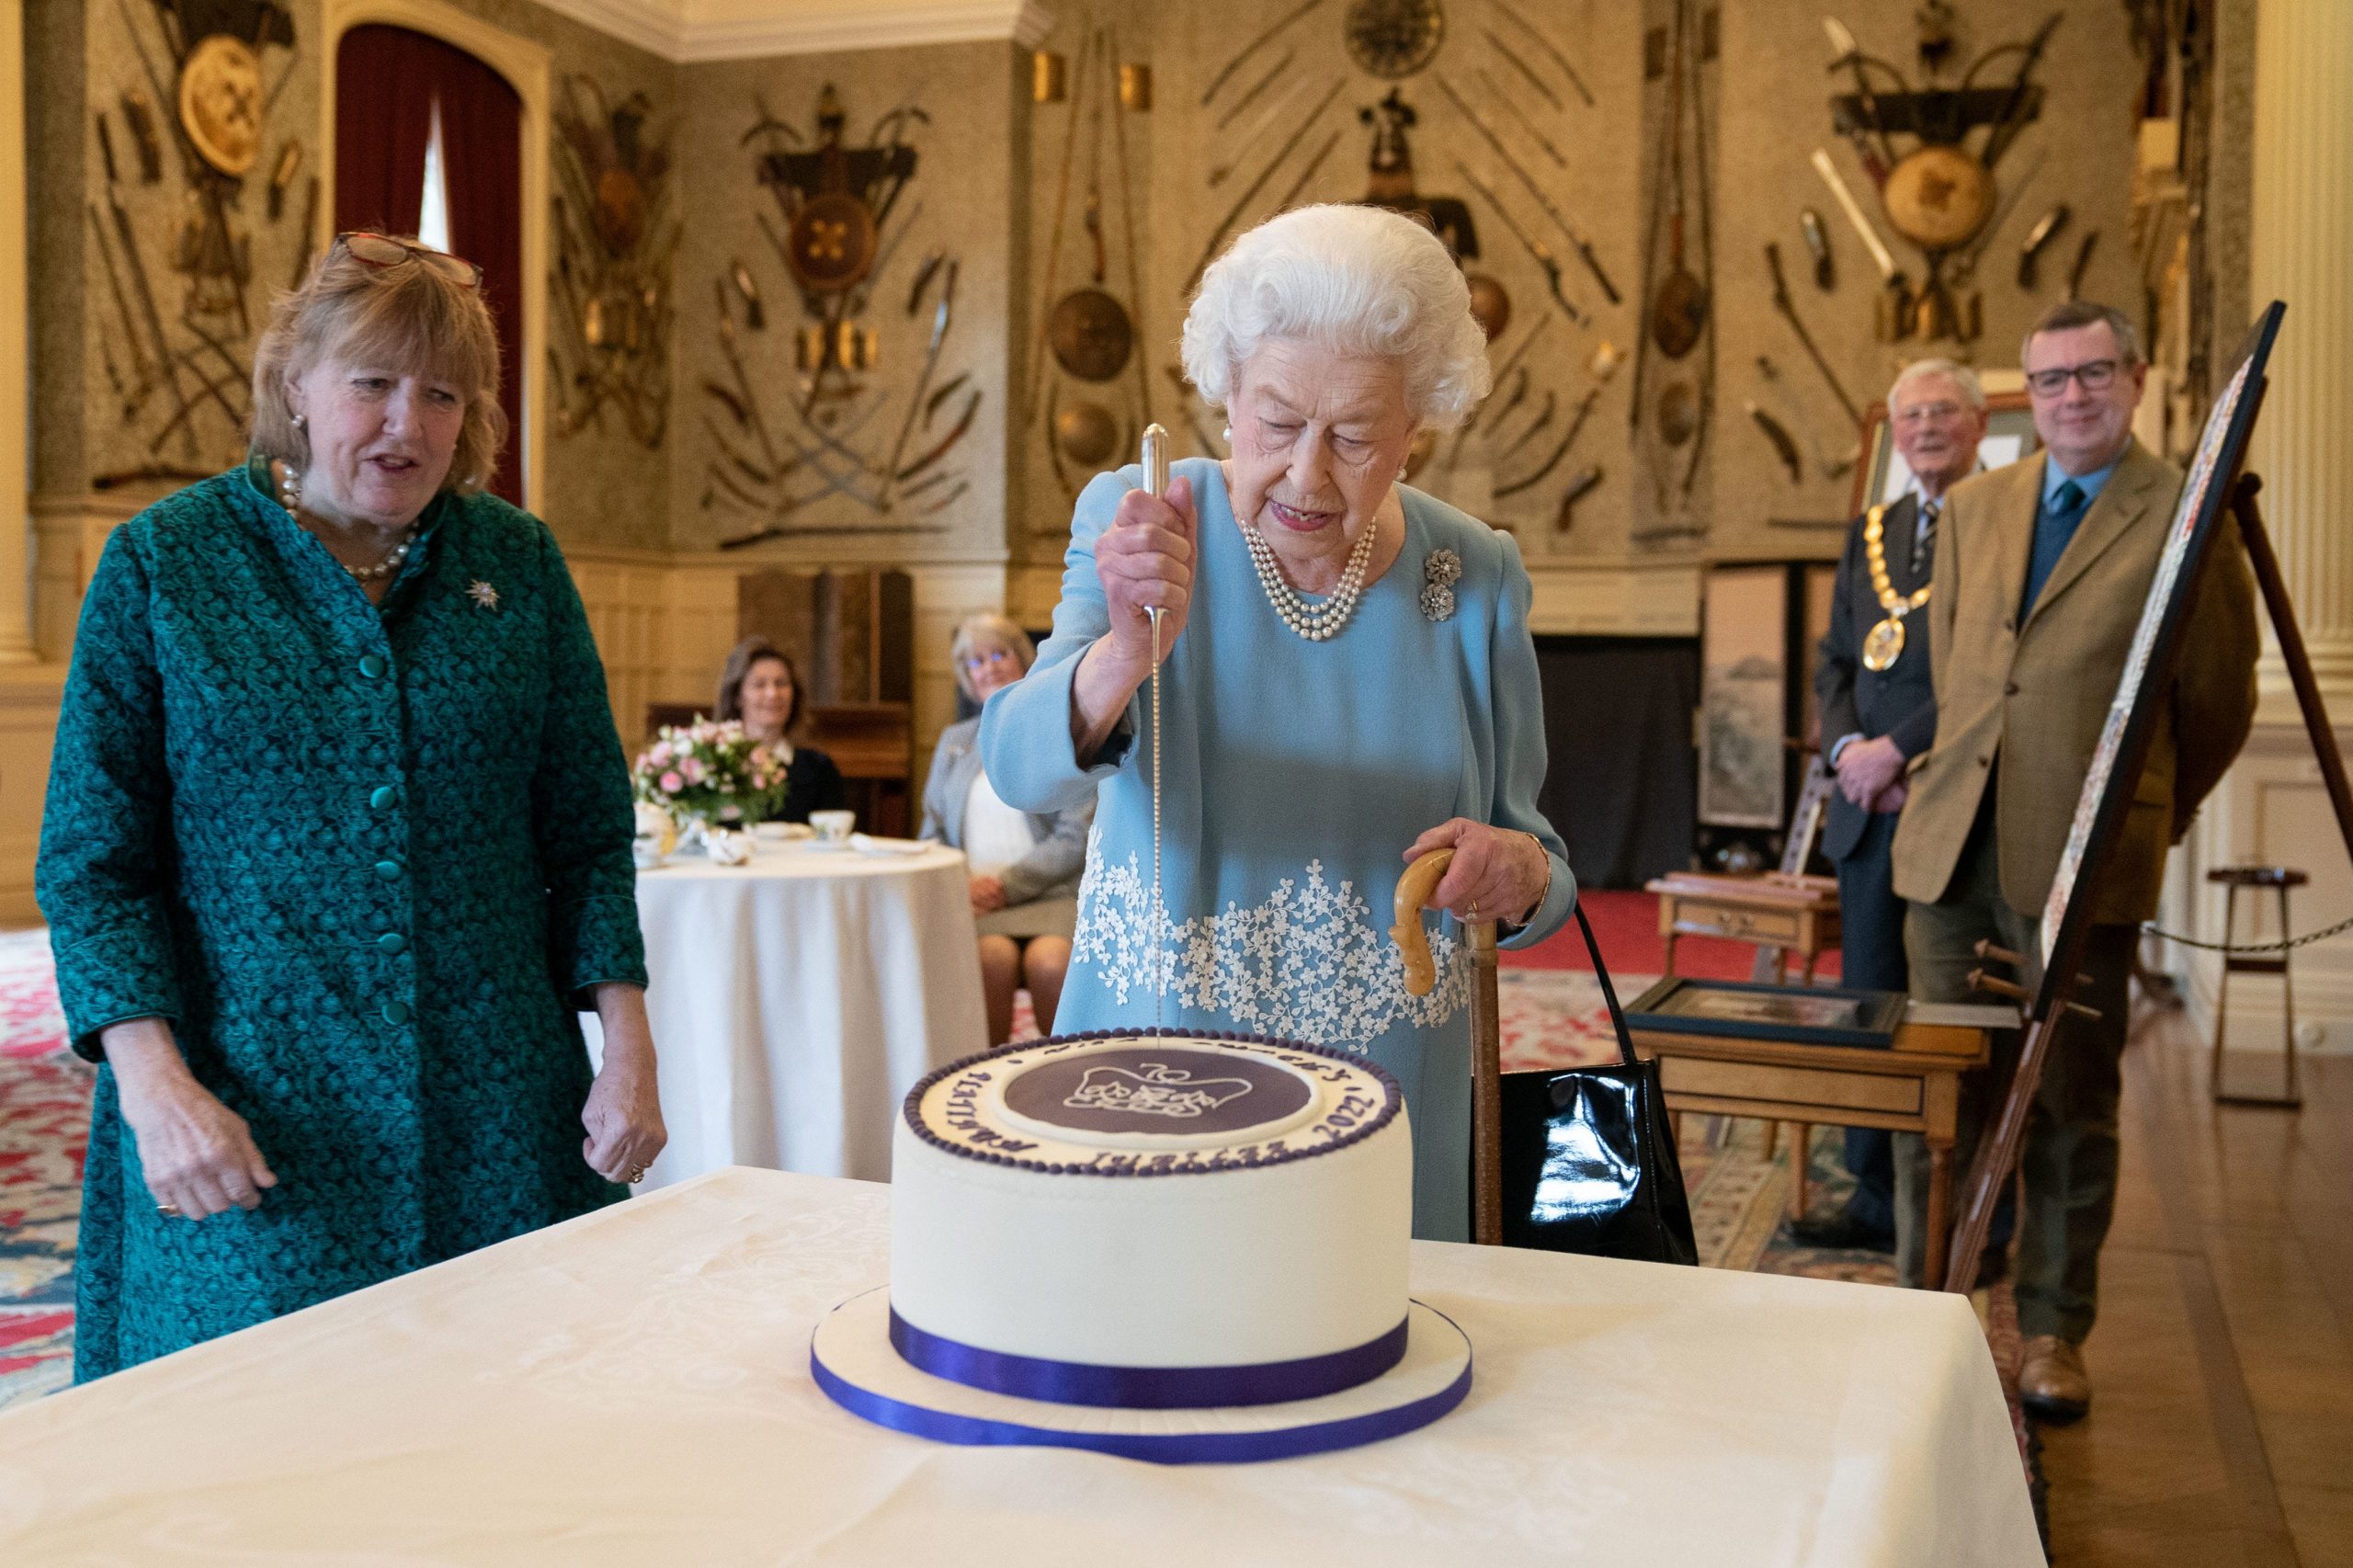 Queen Elizabeth putting a knife into her Platinum Jubilee cake at Sandringham House